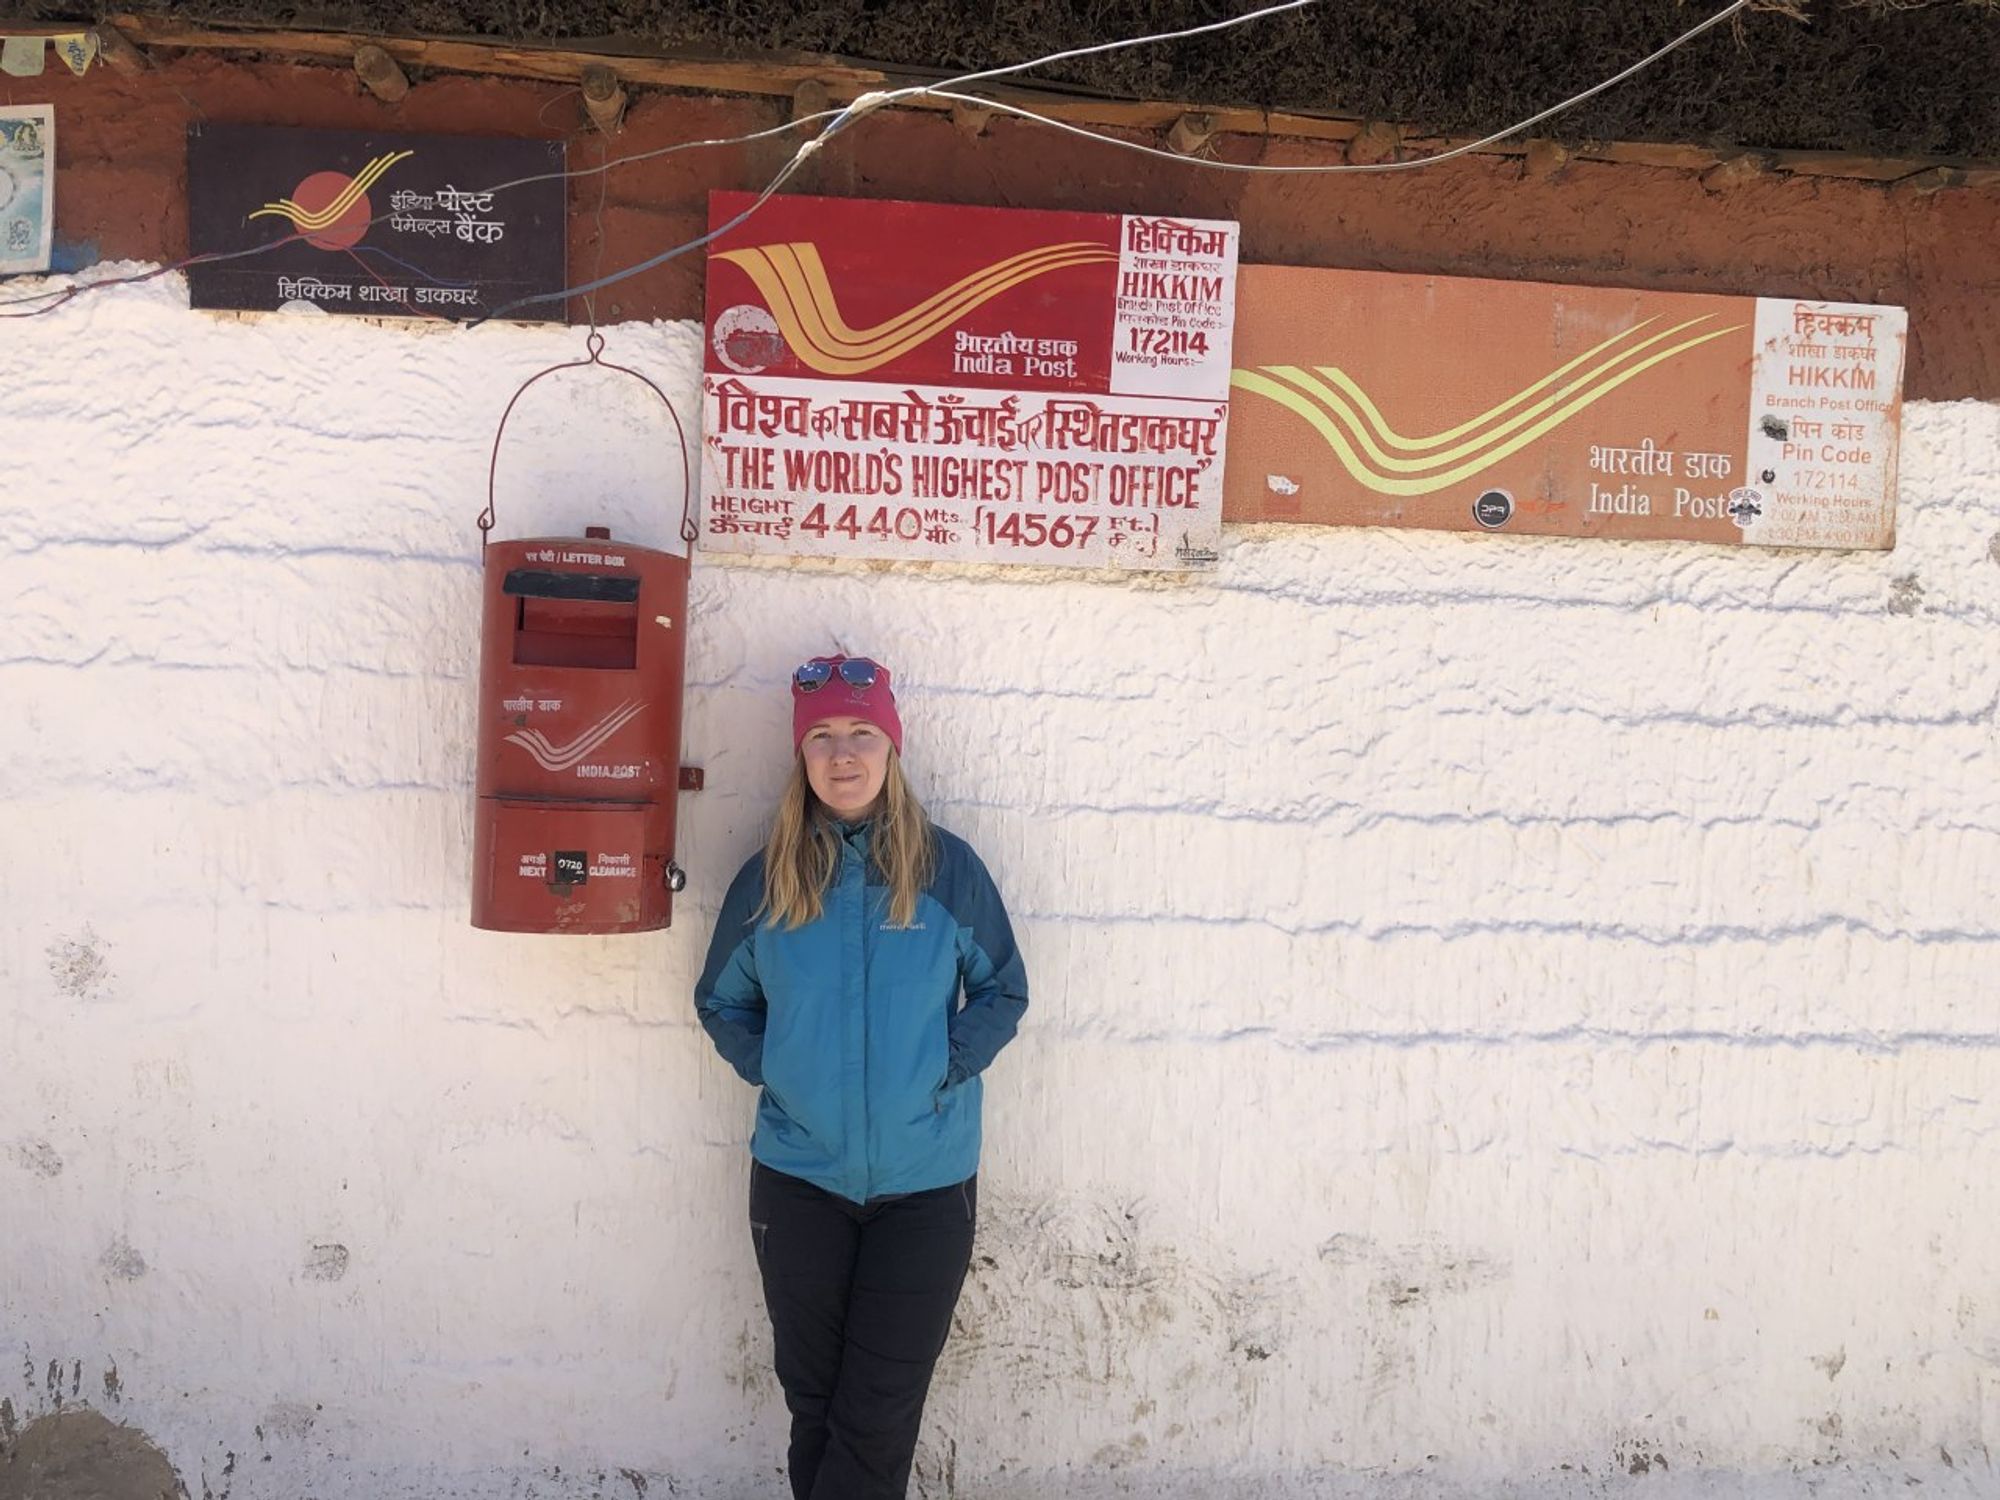 Hikkim, the highest post office in the world